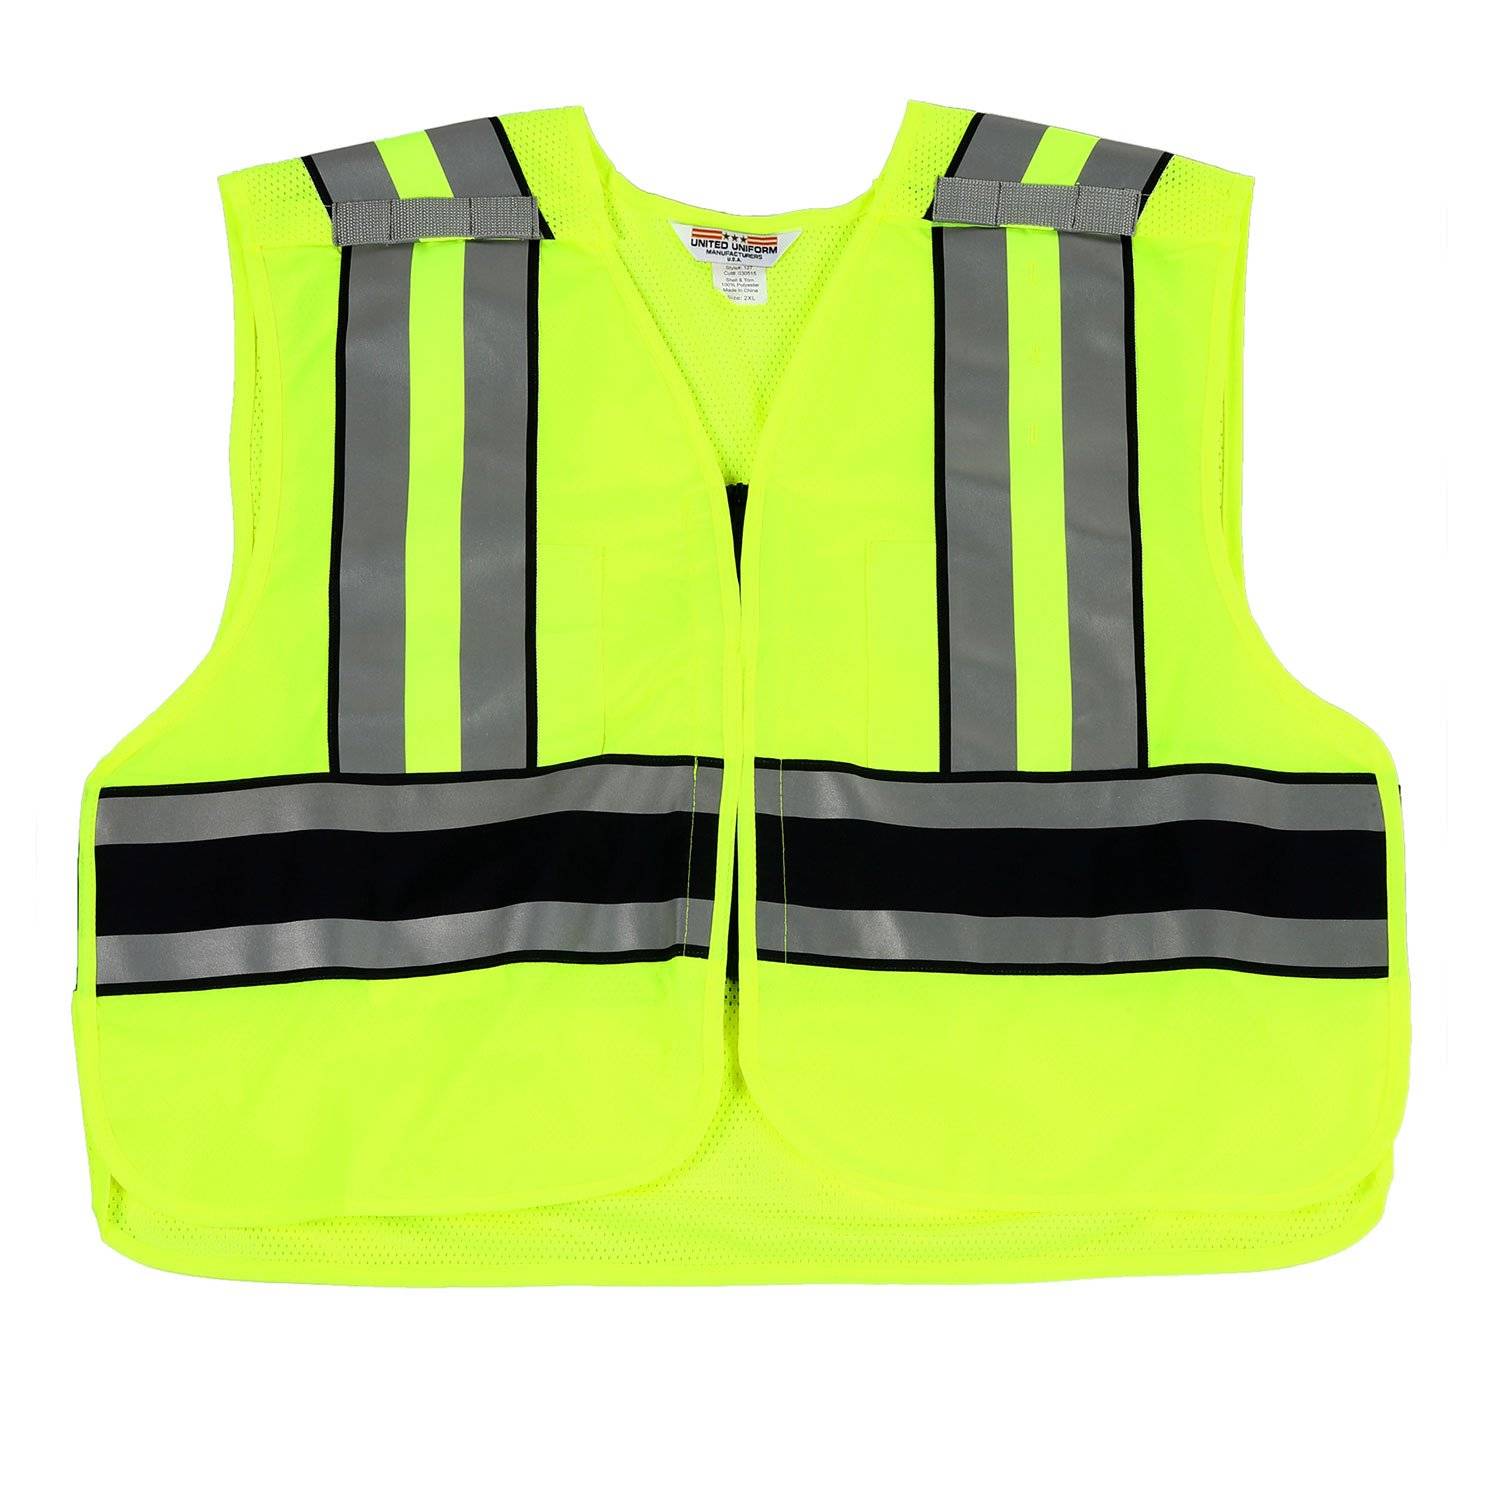 United Uniform Safety Vest, Plain